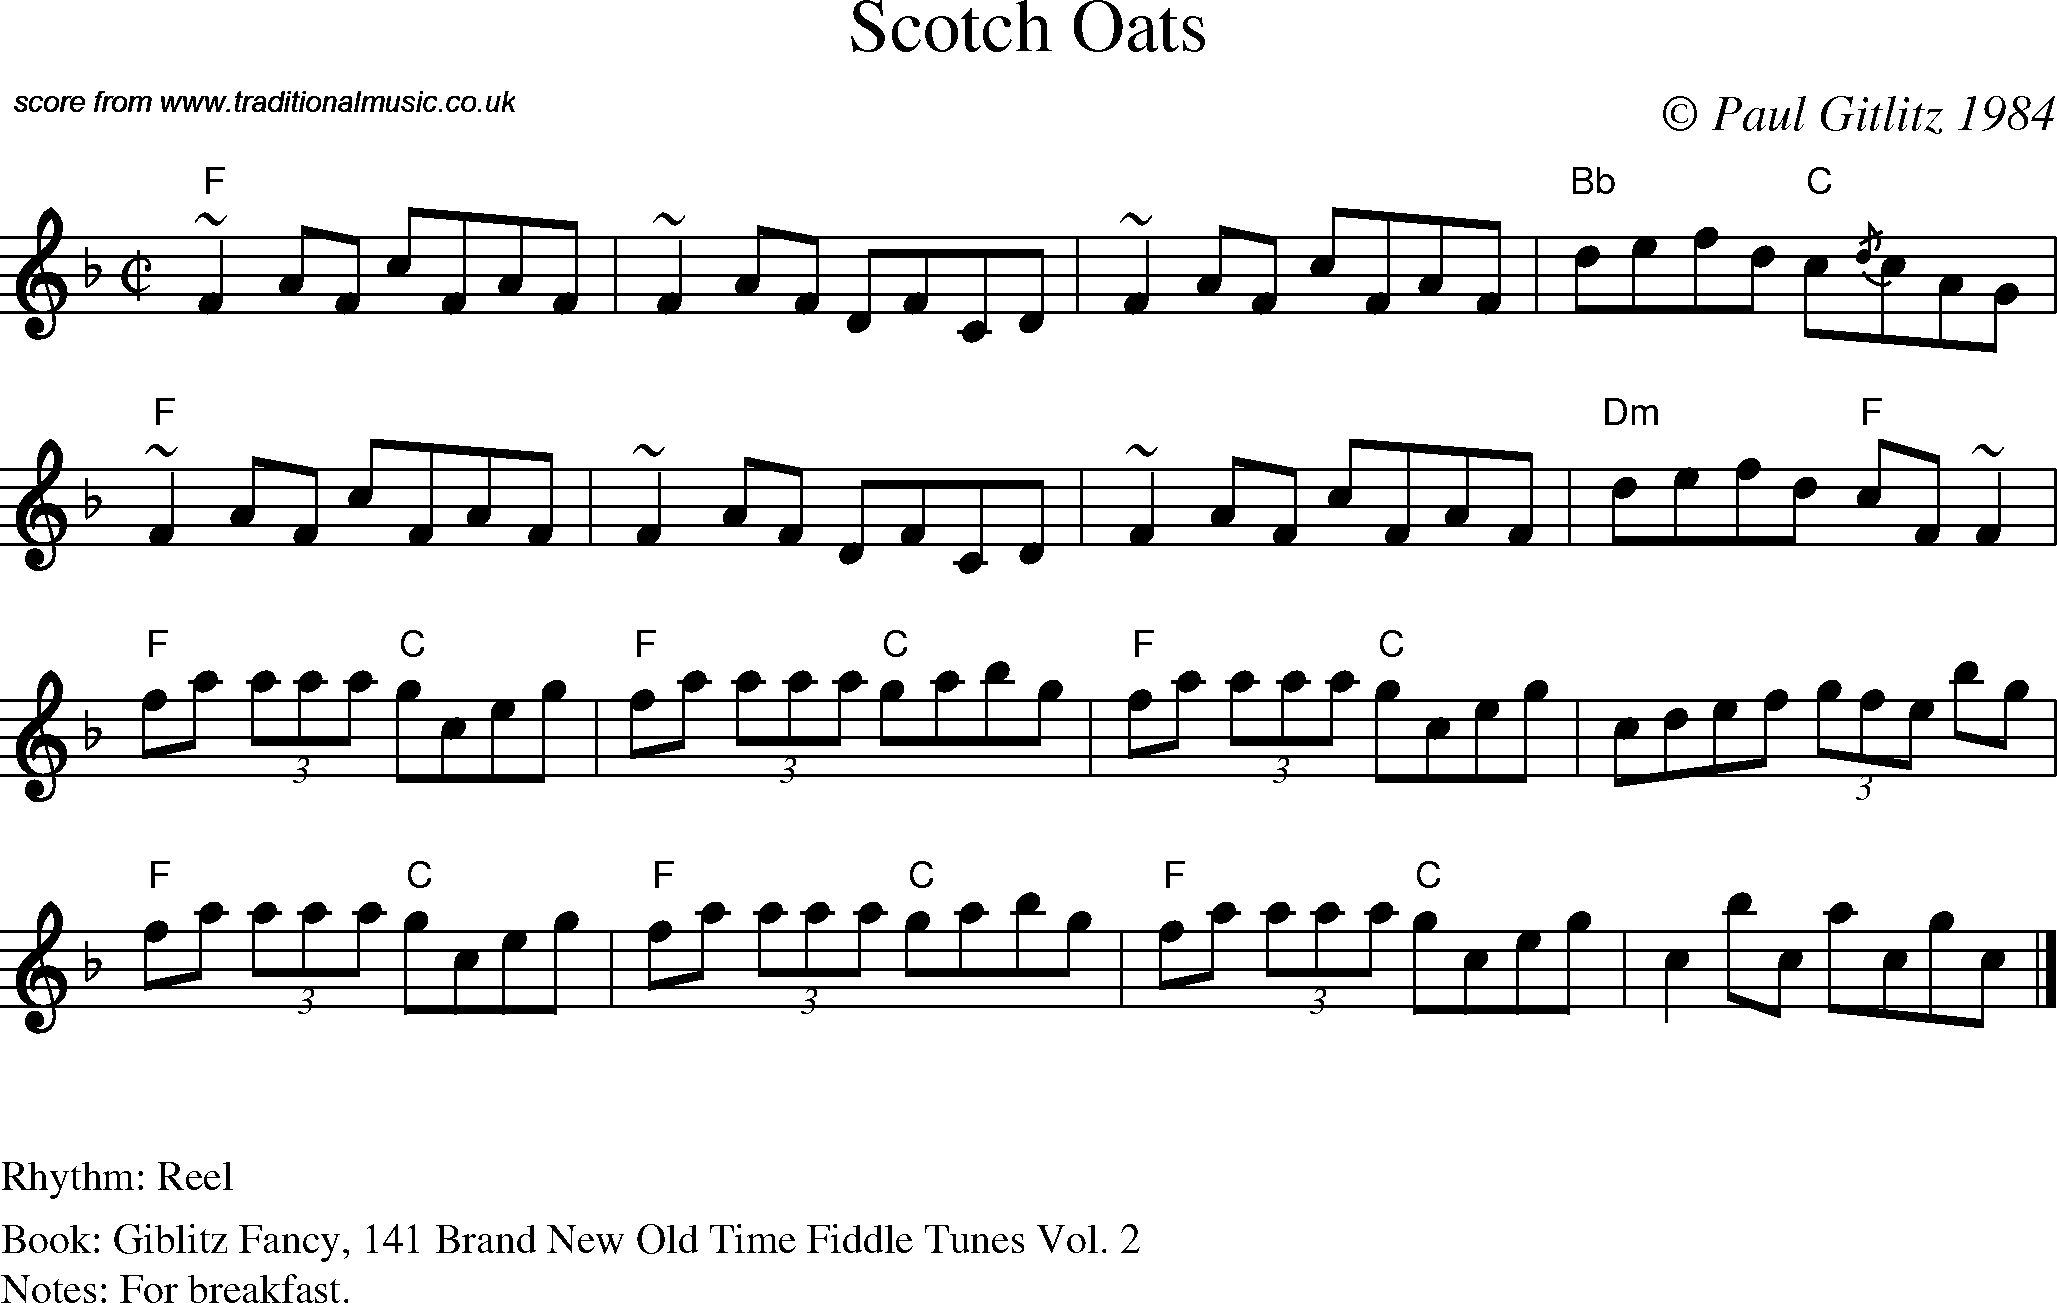 Sheet Music Score for Reel - Scotch Oats